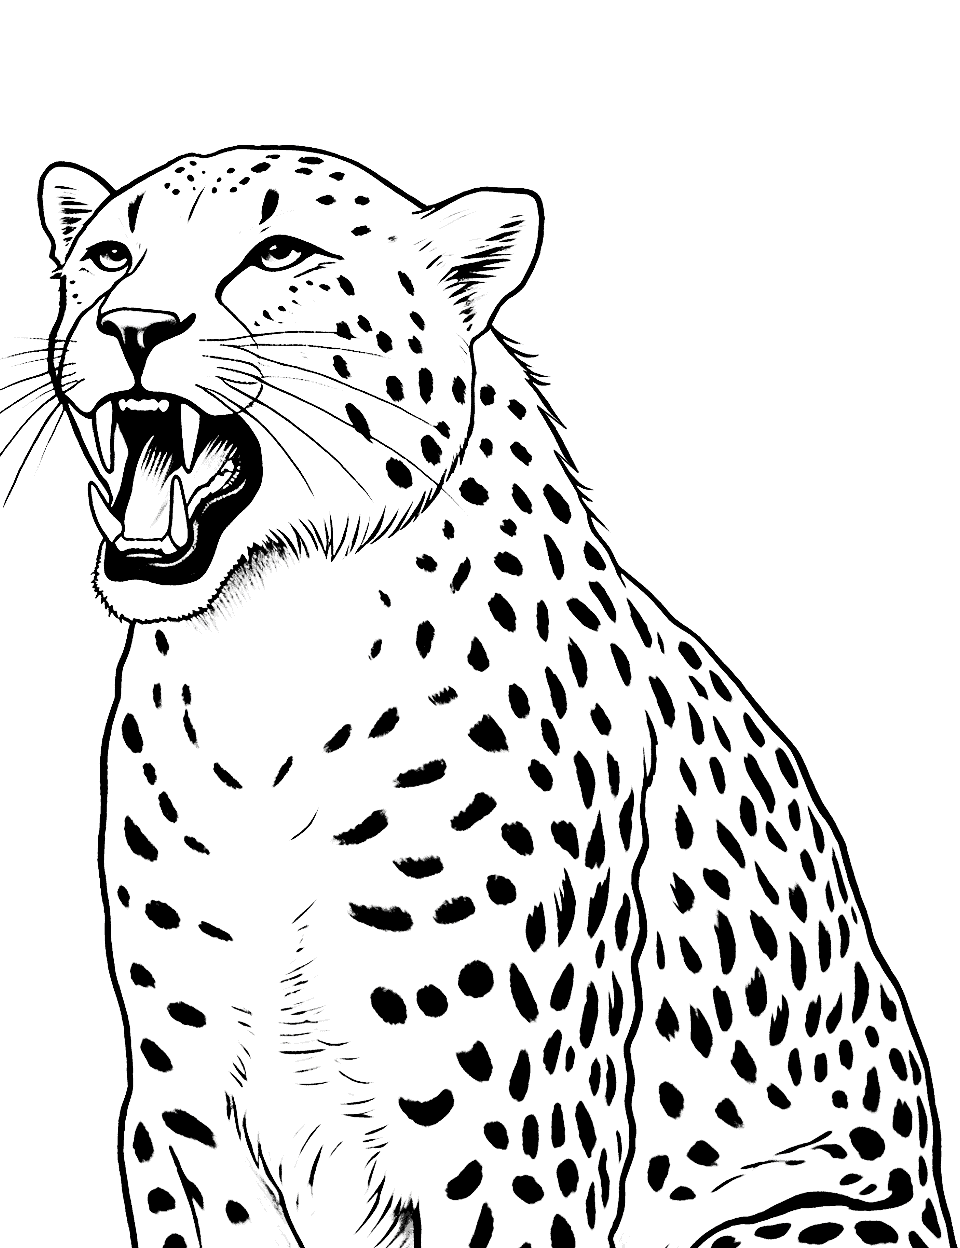 Sleepy Cheetah Yawning Coloring Page - A relaxed cheetah yawning, showing its teeth and tongue.